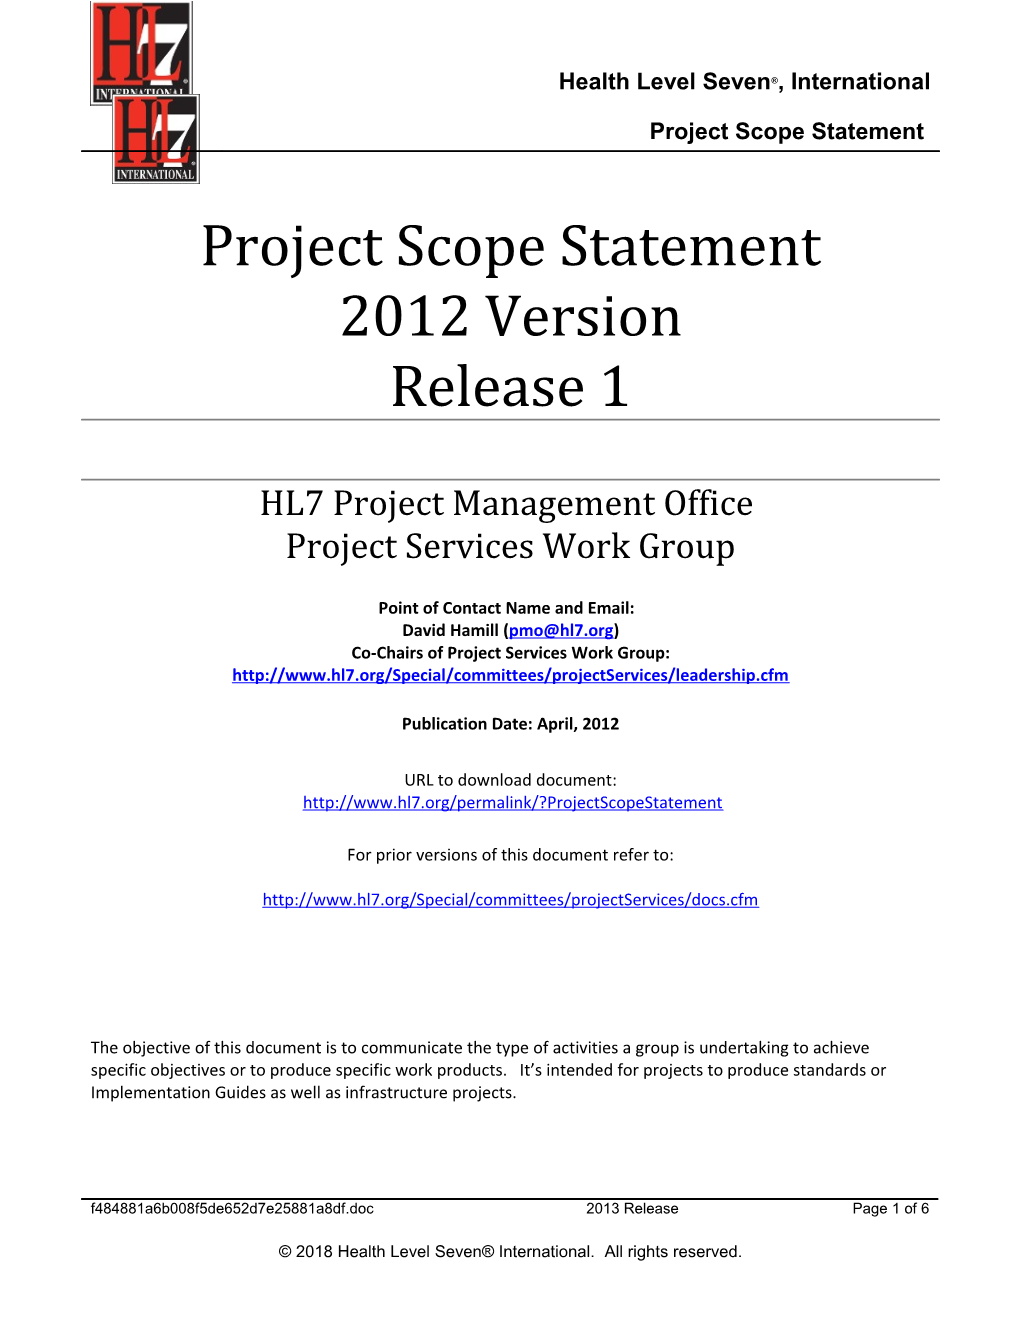 HL7 Project Scope Statement s9